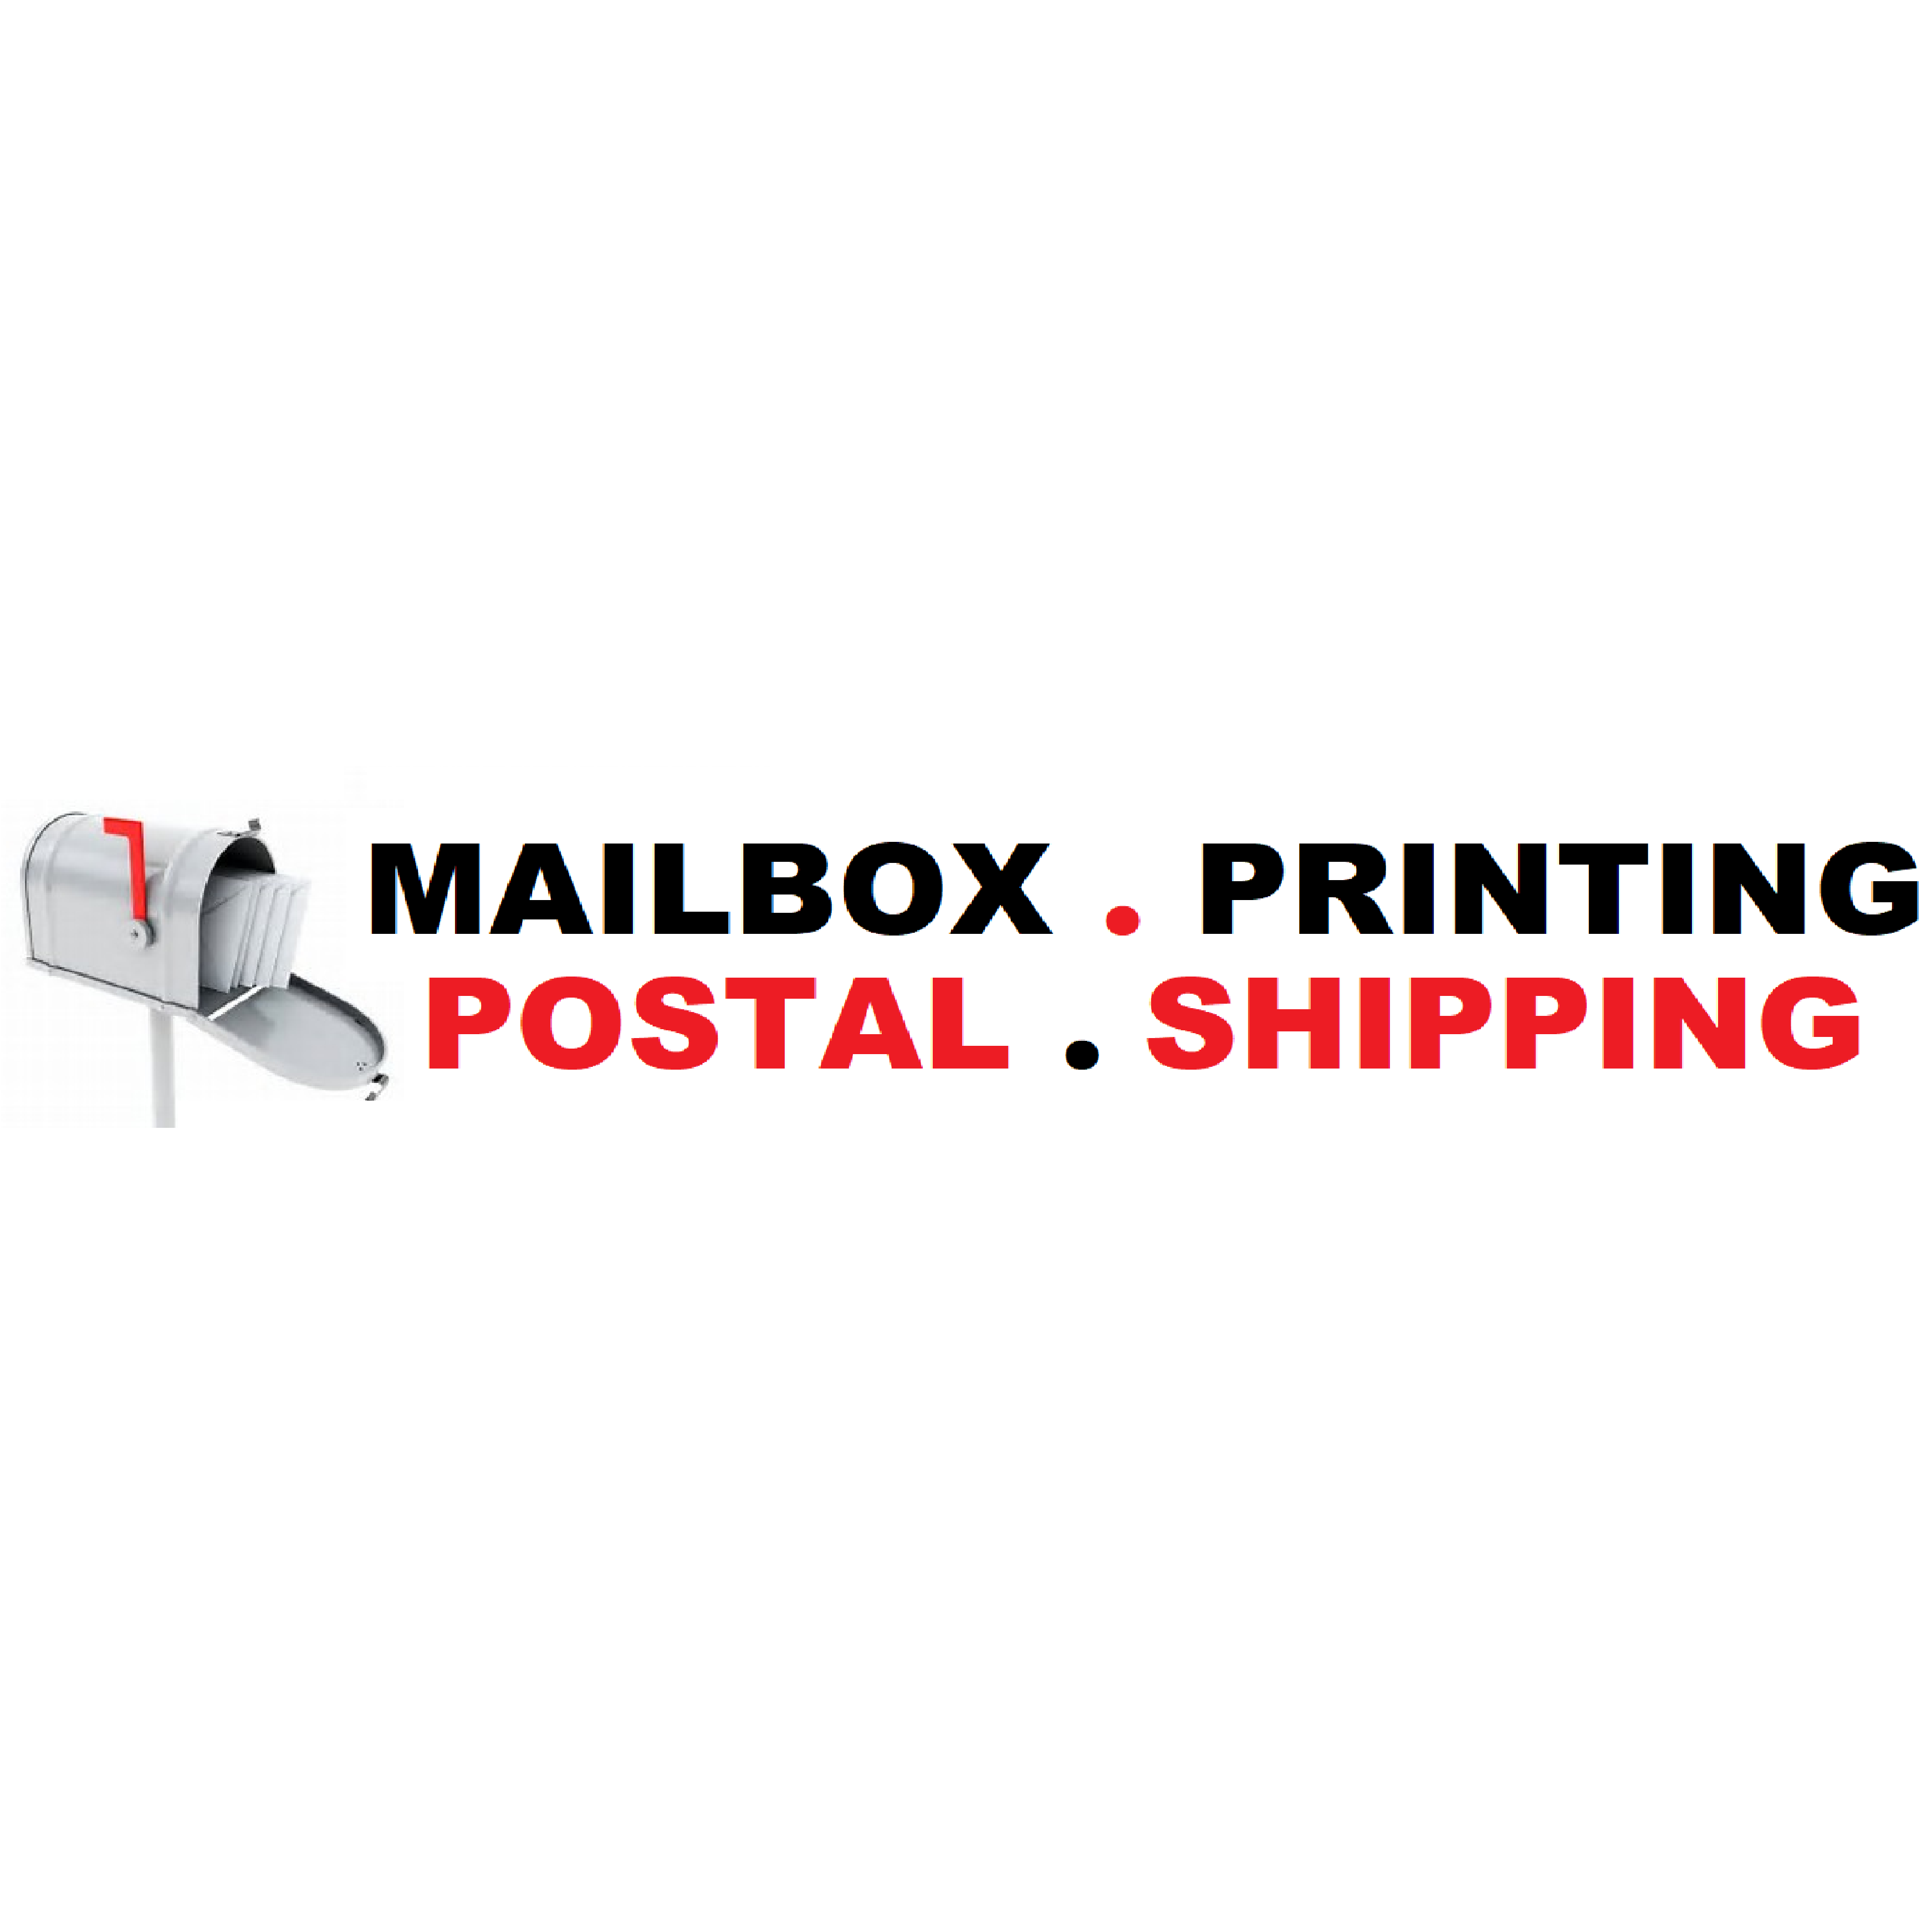 Mailbox Printing Postal Shipping - San Antonio, TX 78201 - (210)455-6229 | ShowMeLocal.com